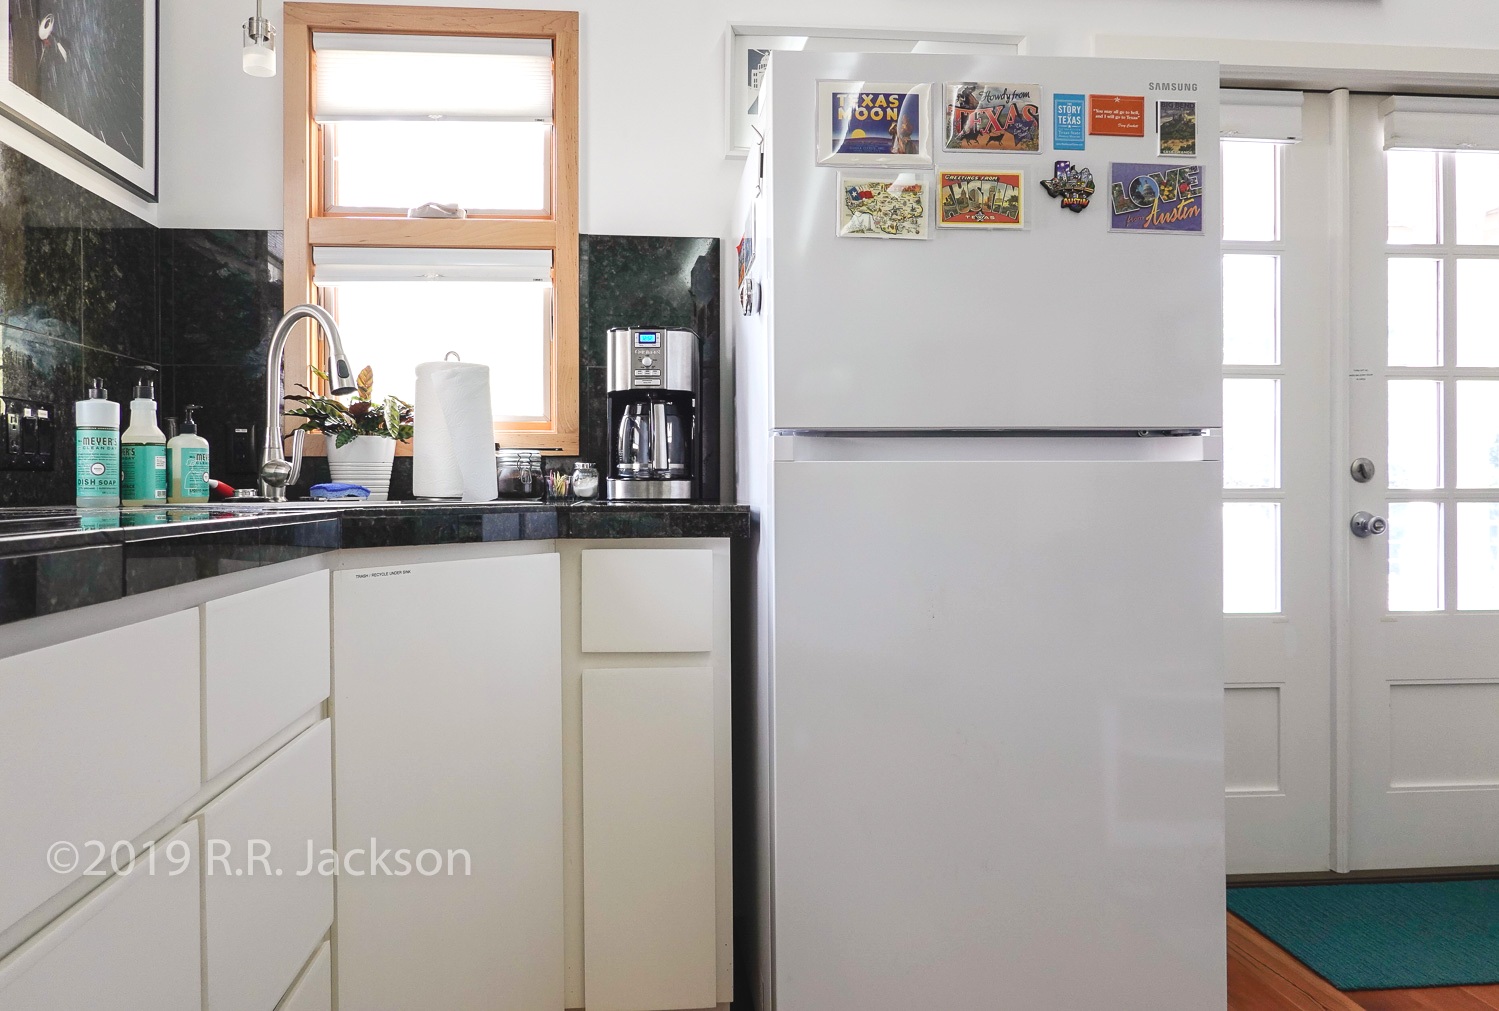 Refrigerator - new August 2019